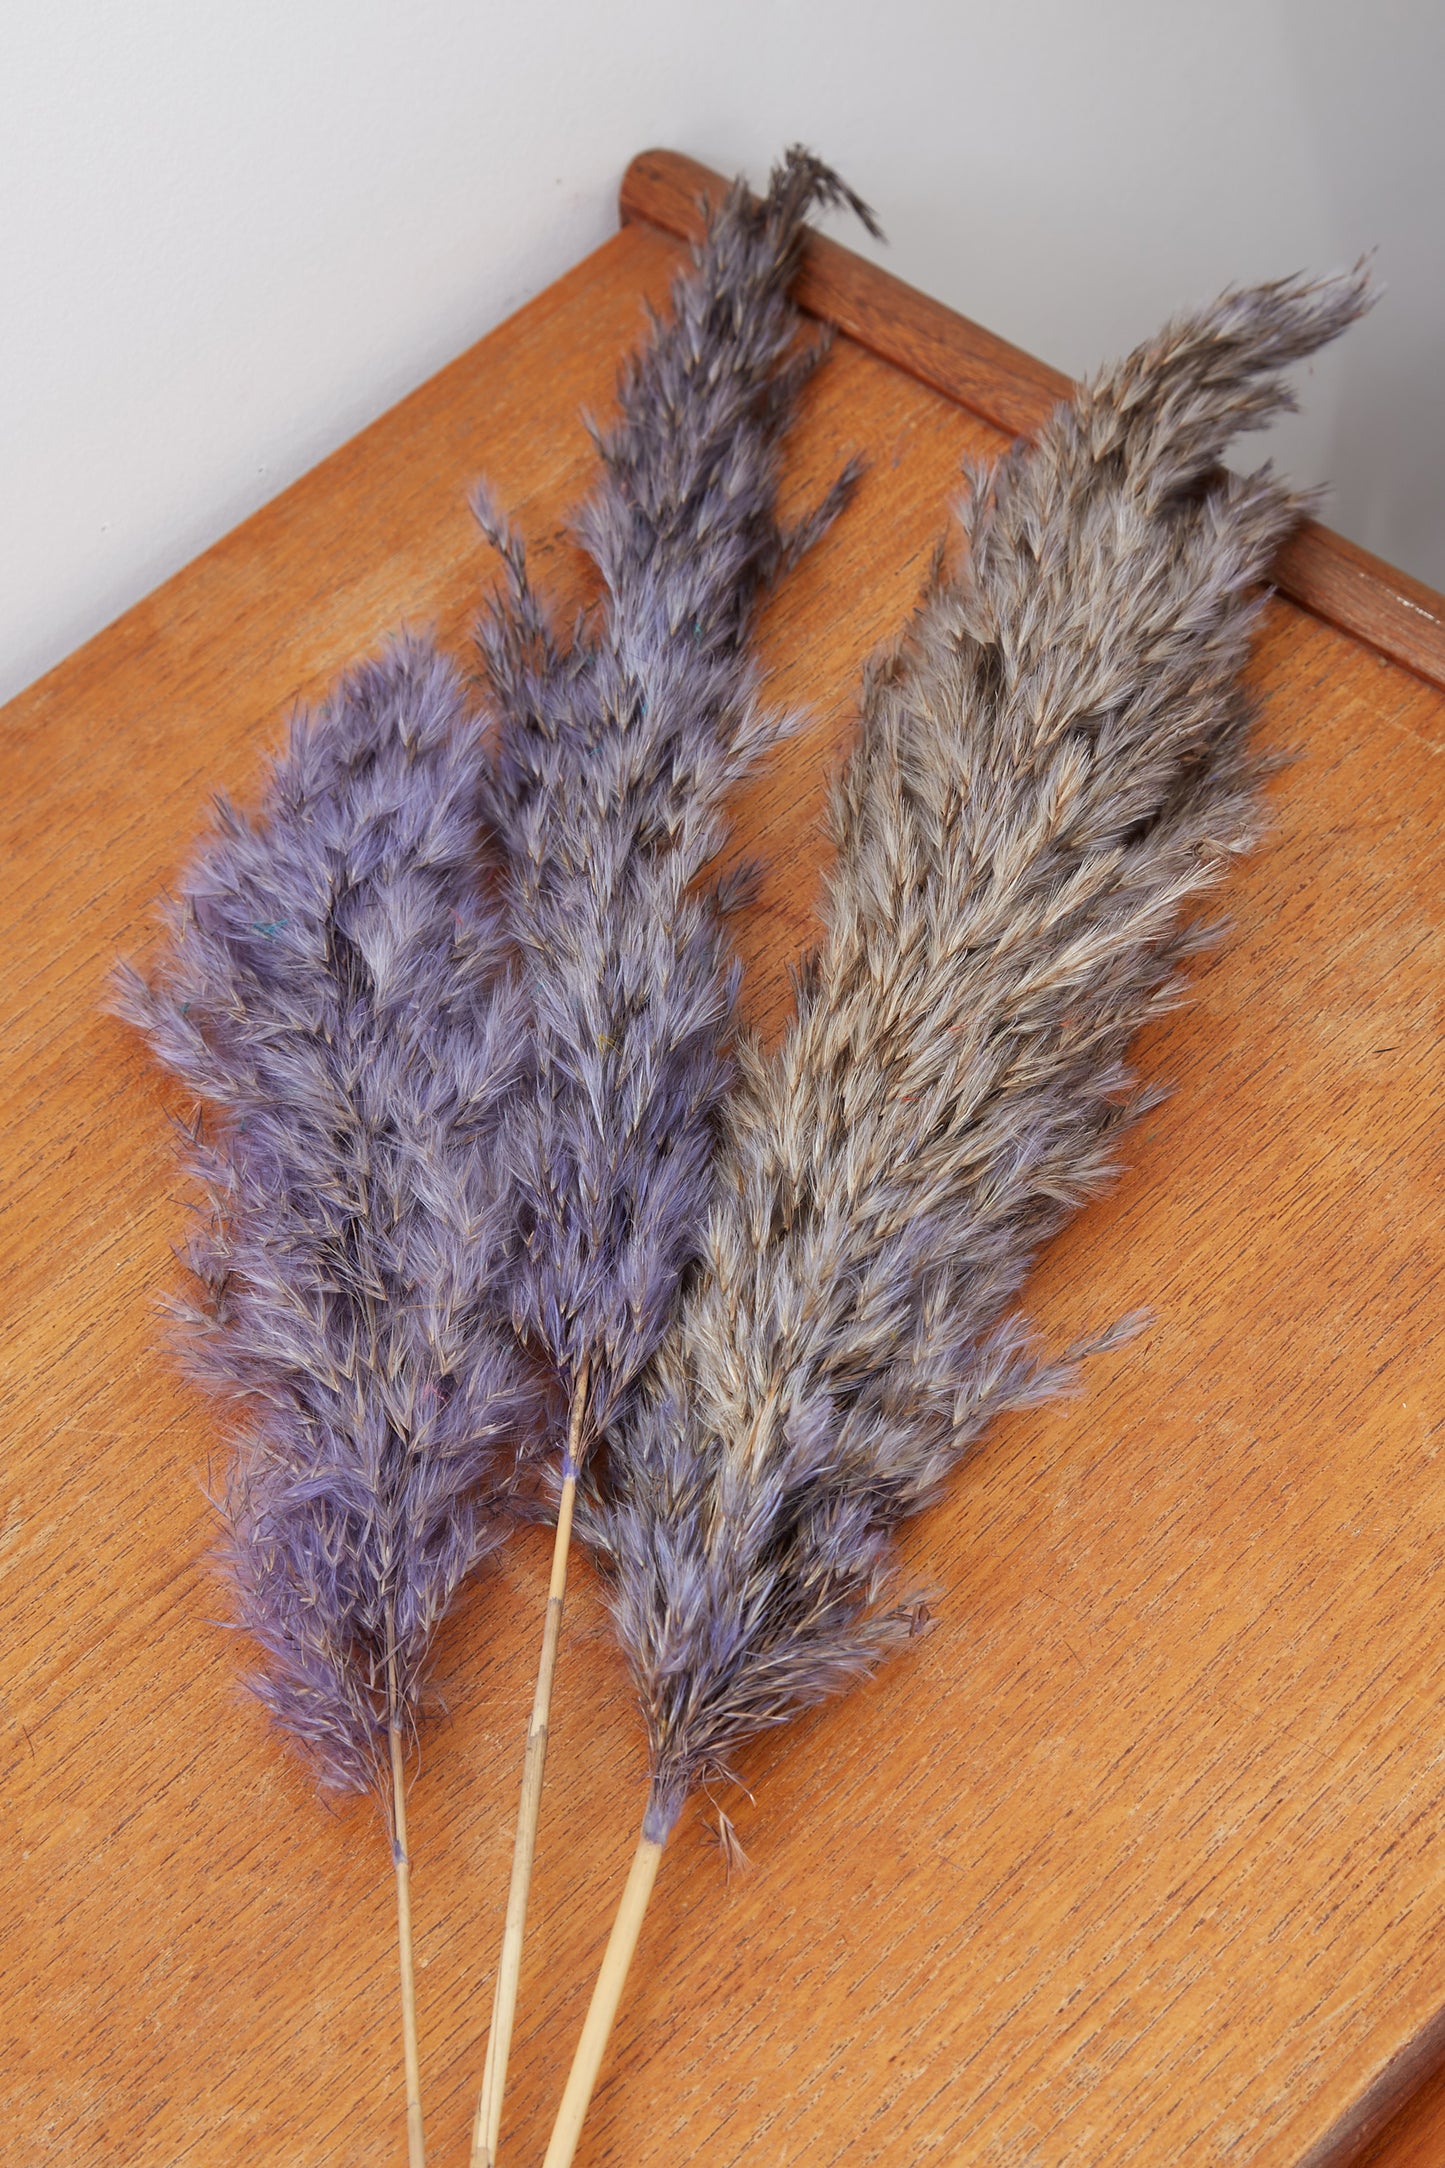 3 Stems of Lavender Pampas Grass